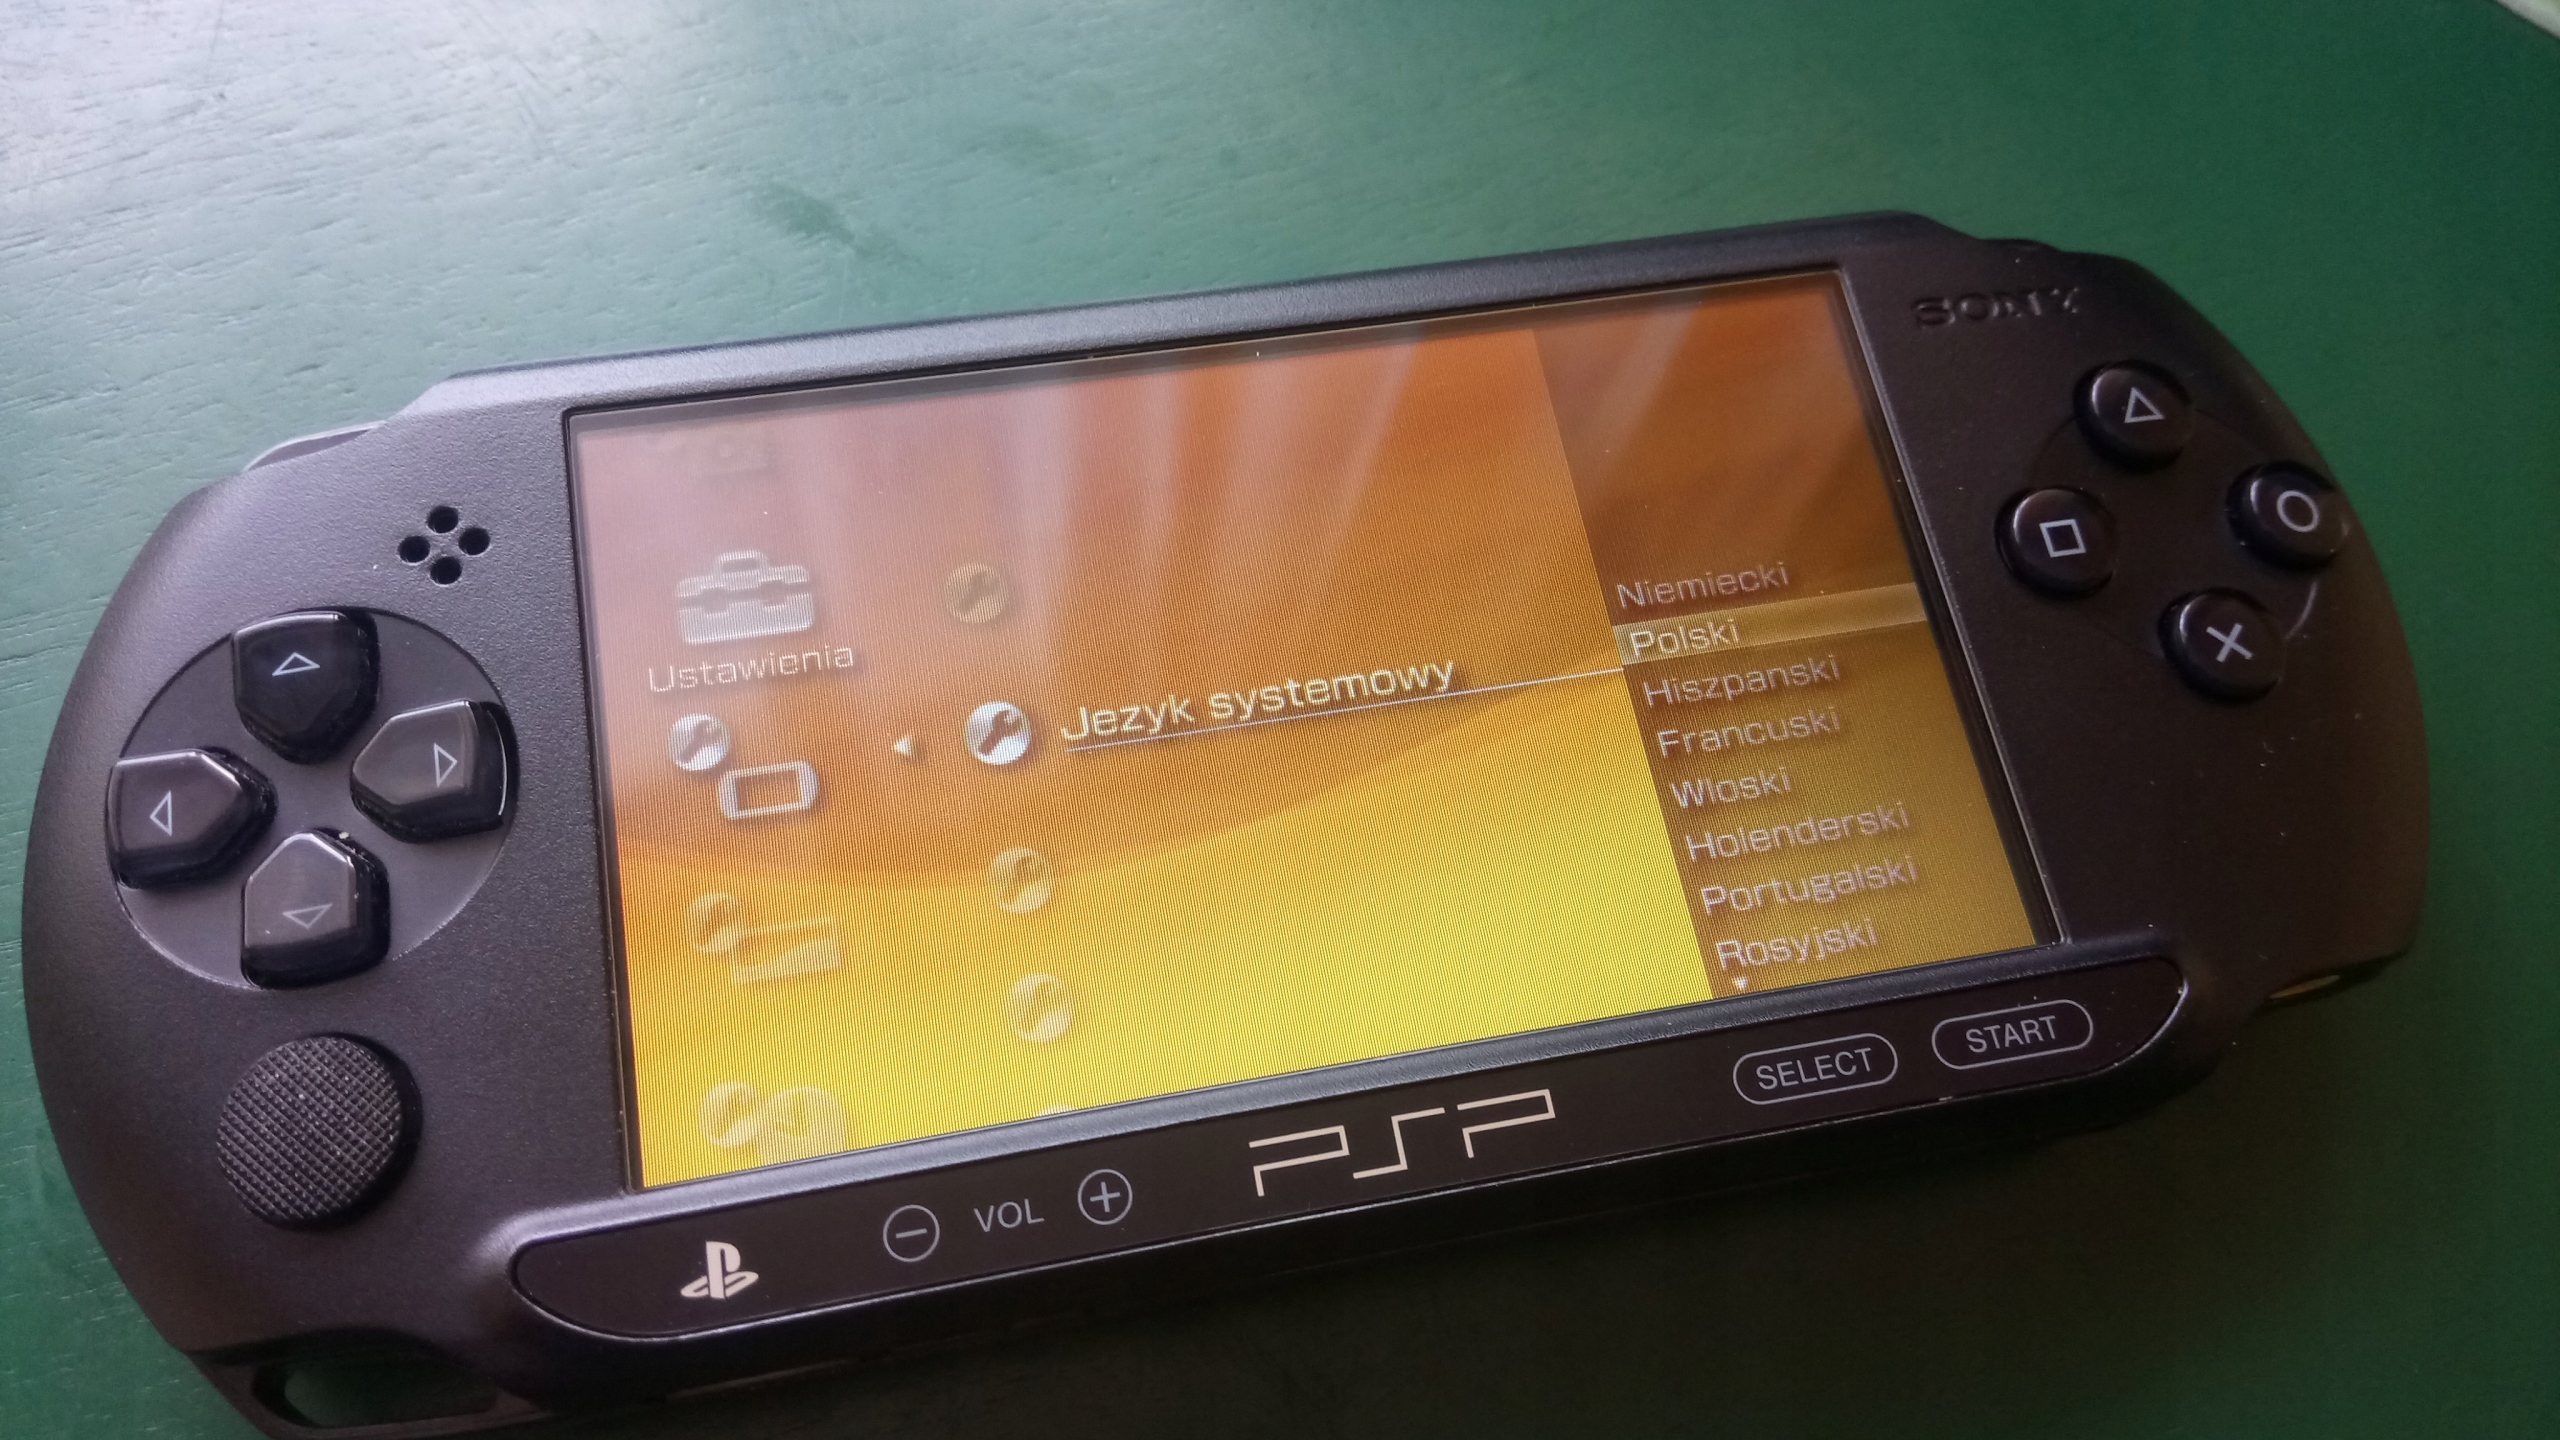 Psp поддержанная. Sony PSP 2007. Sony PSP e1004. PSP 3008. Sony PSP 2012.